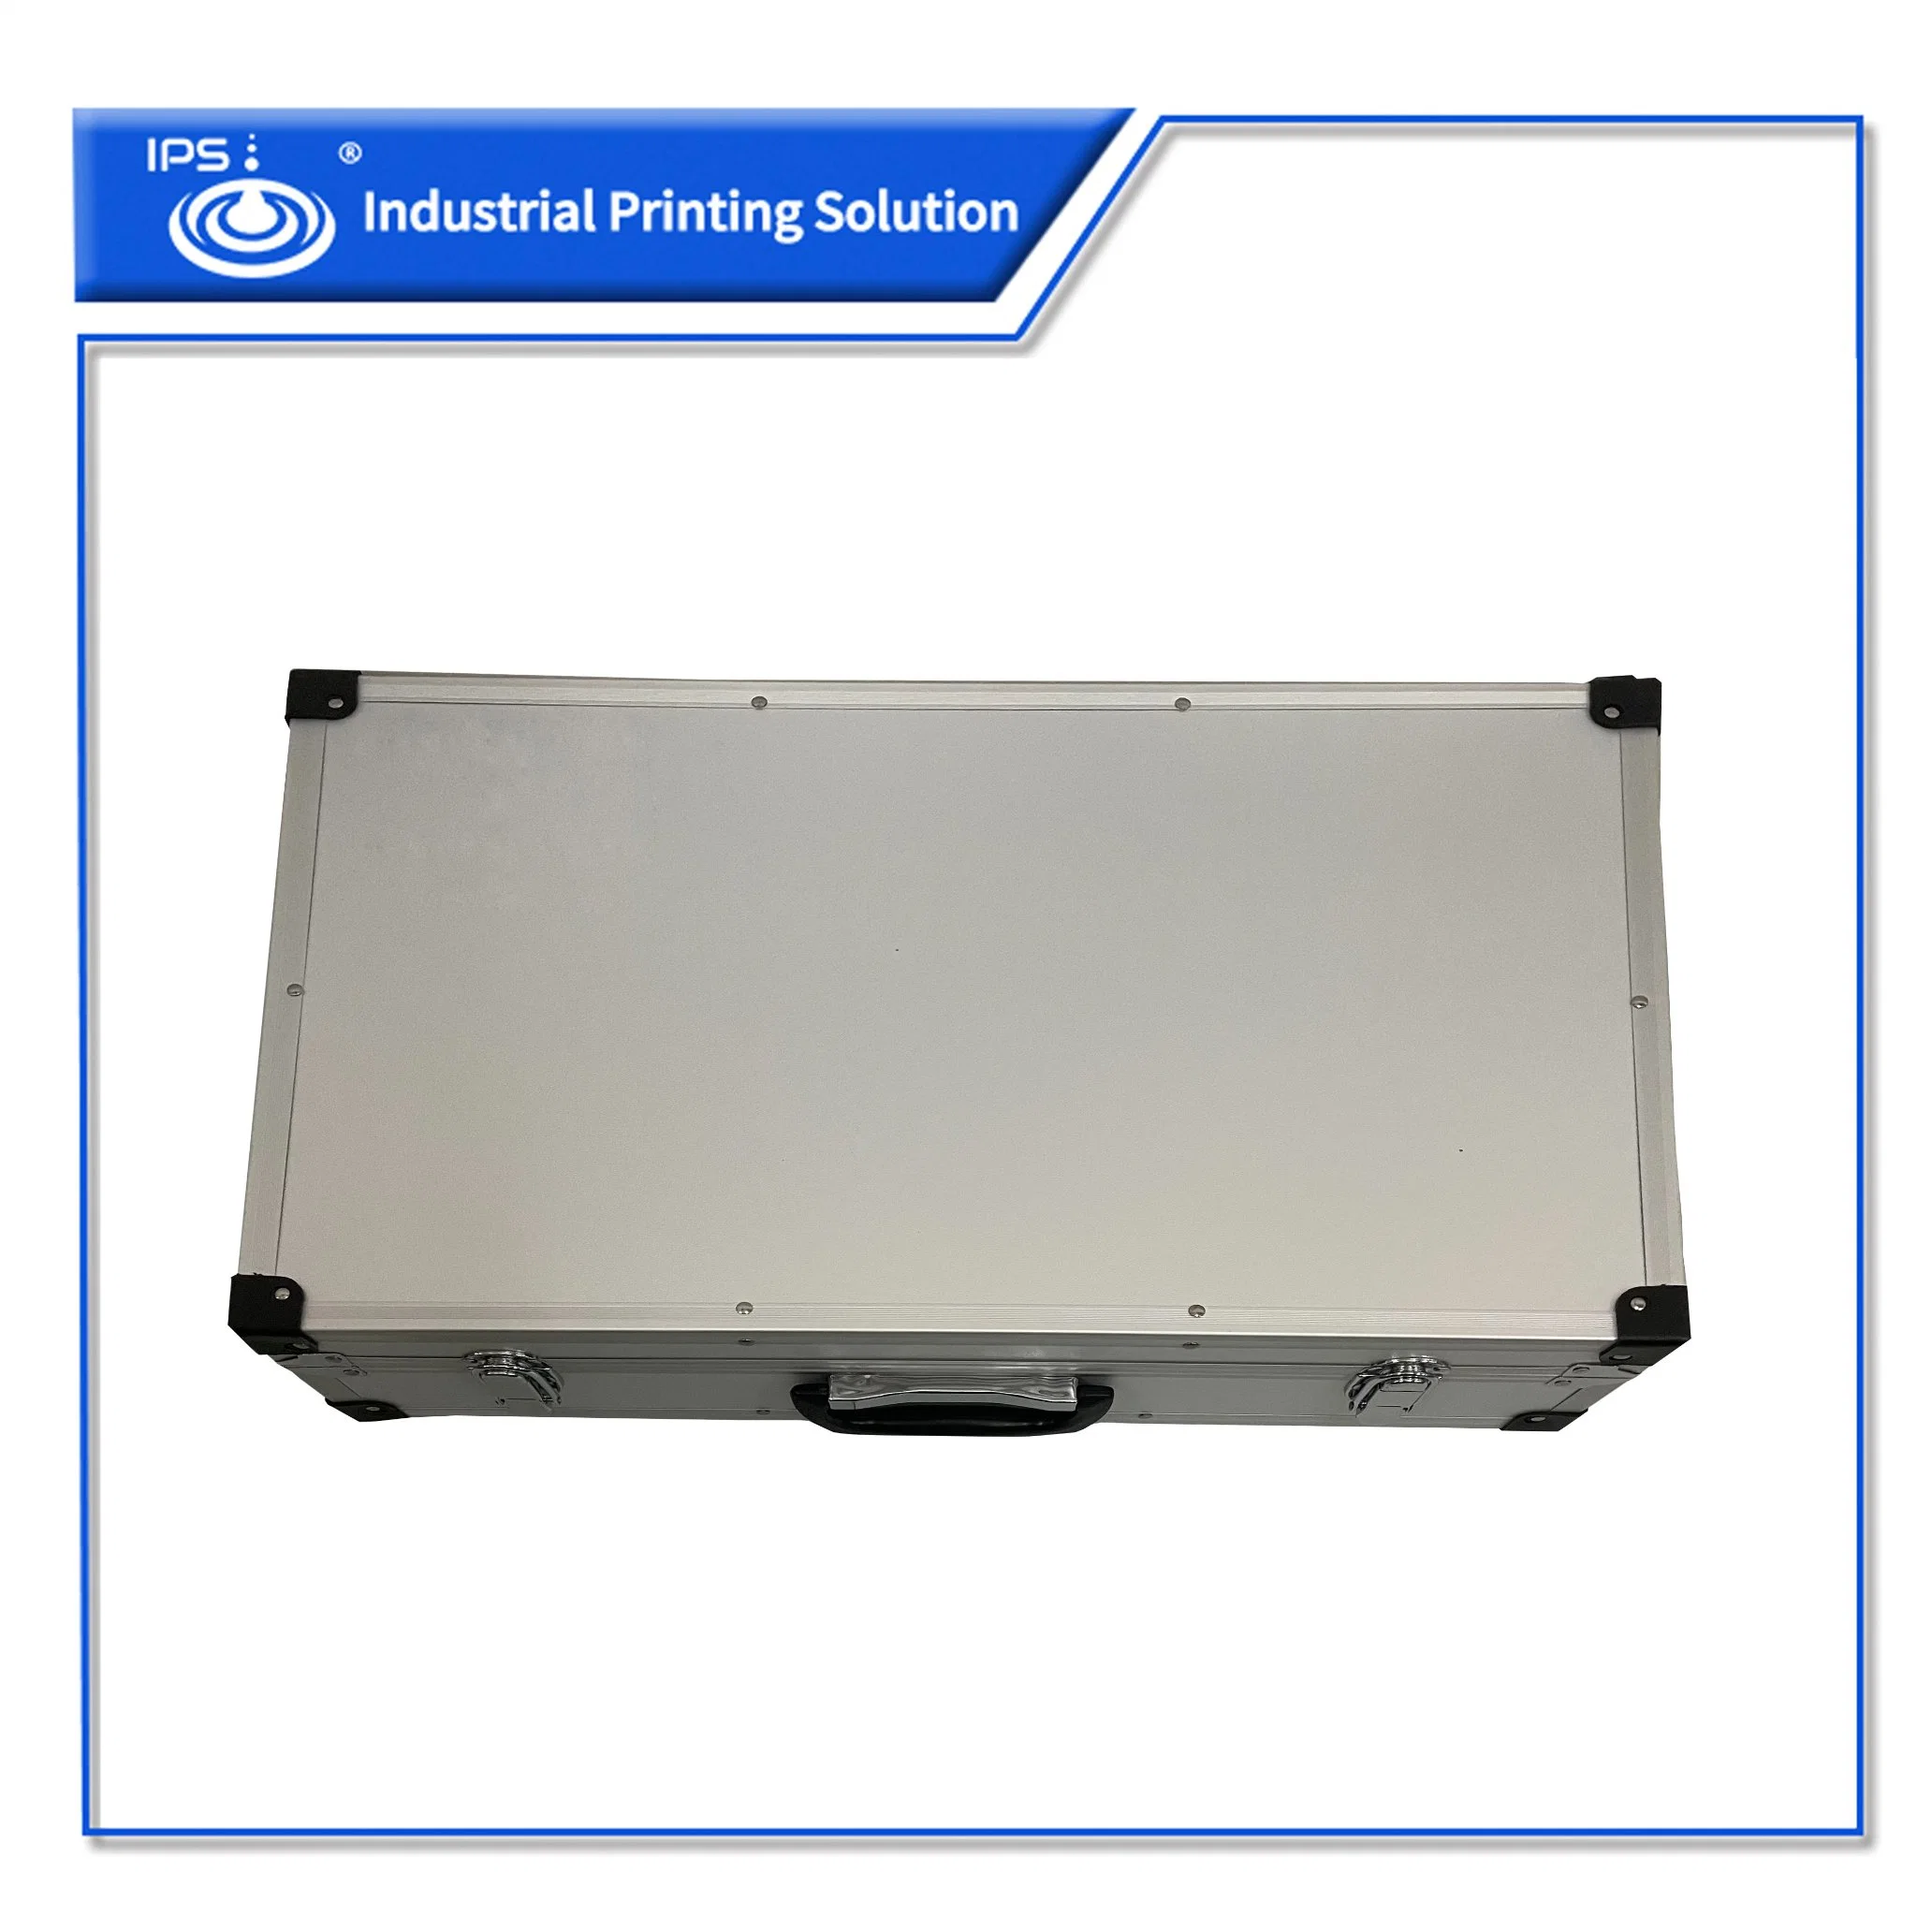 IPS 8920 - 10" 25.4mm OEM/ODM Customized Applications Global Language Thermal Inkjet Printer